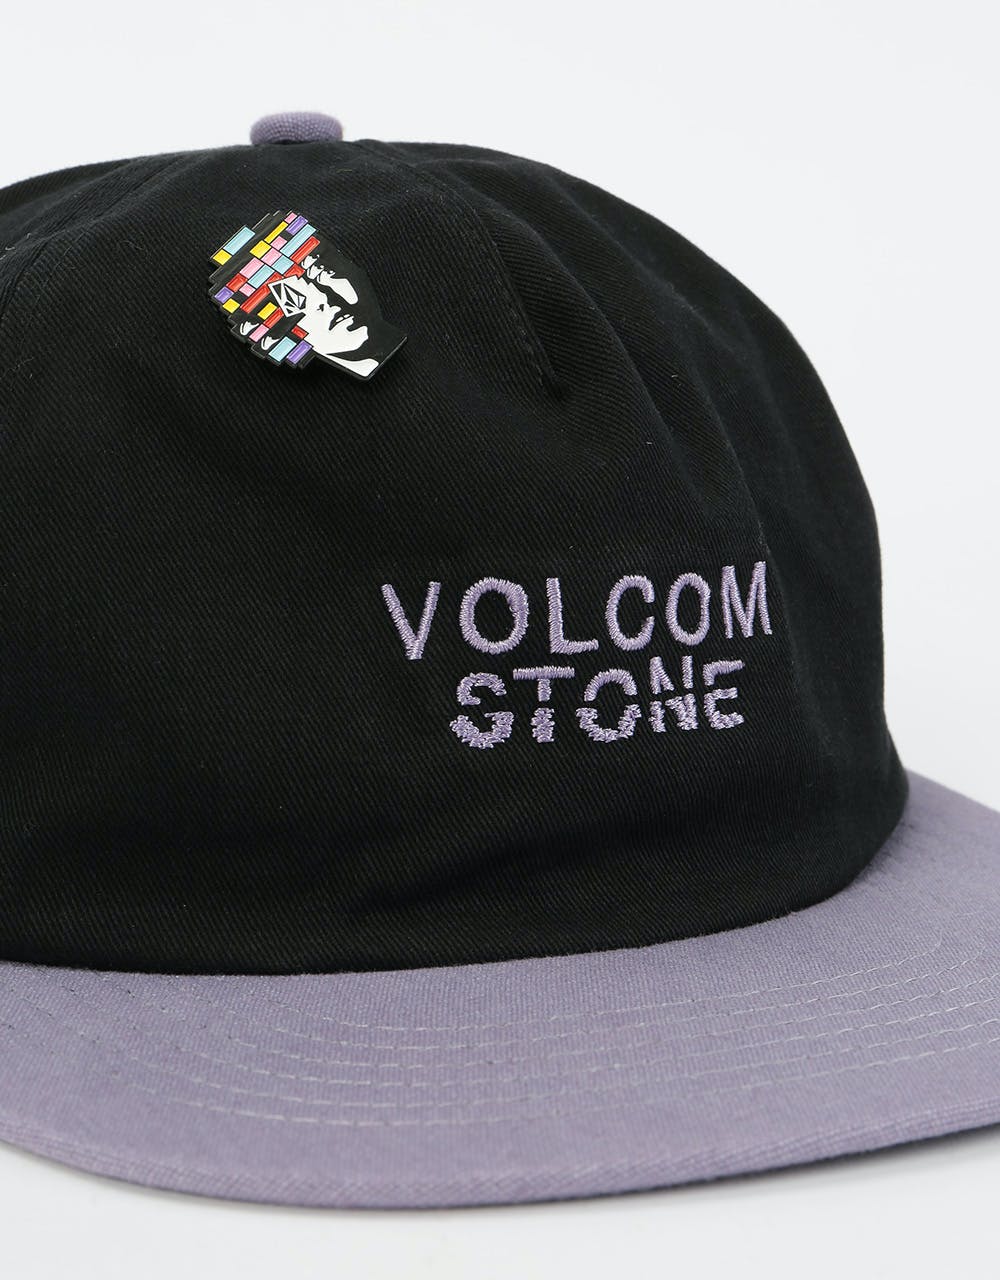 Volcom Noa Noise Strapback Cap - Black